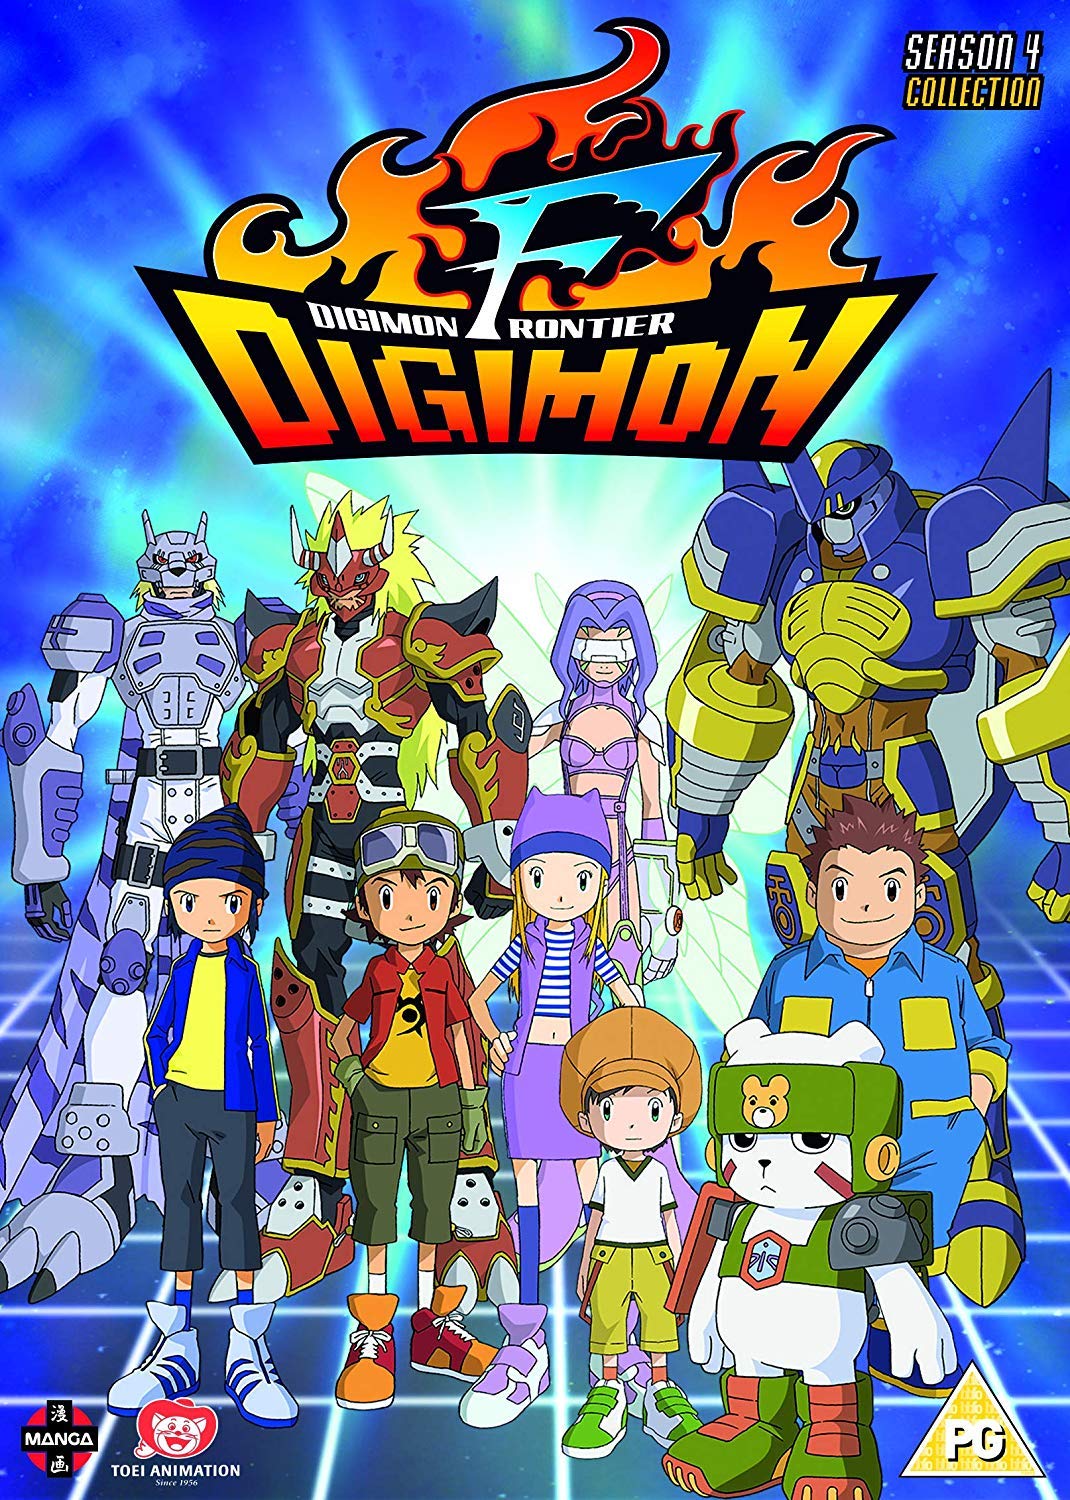 Digimon Frontier (Digital Monsters Season 4) [DVD], Movies & TV